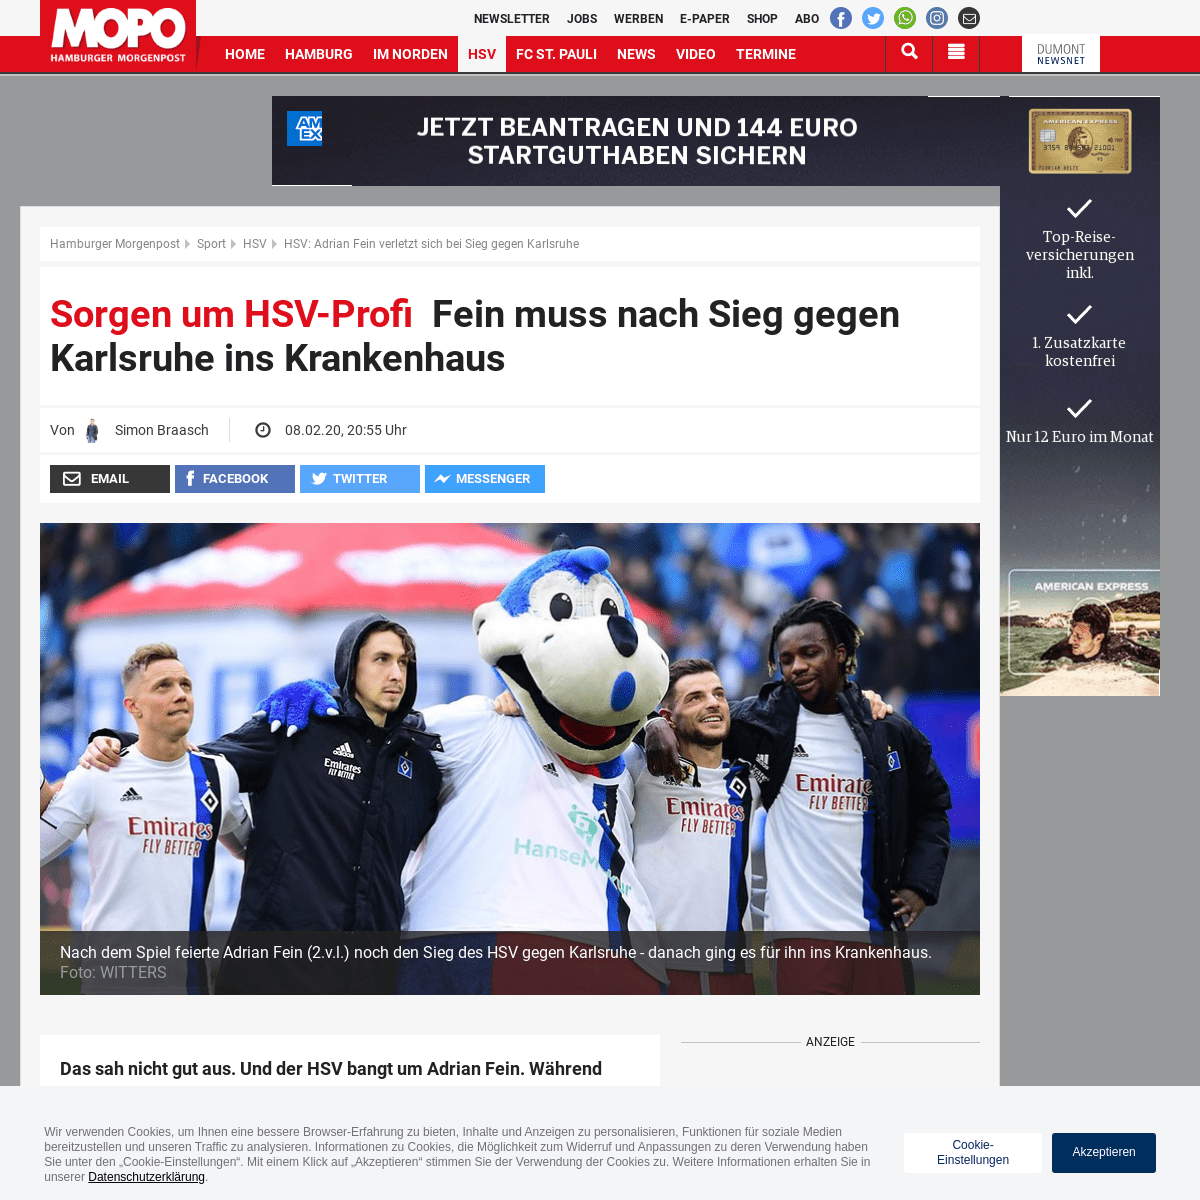 A complete backup of www.mopo.de/sport/hsv/sorgen-um-hsv-profi-fein-muss-nach-sieg-gegen-karlsruhe-ins-krankenhaus-36207086